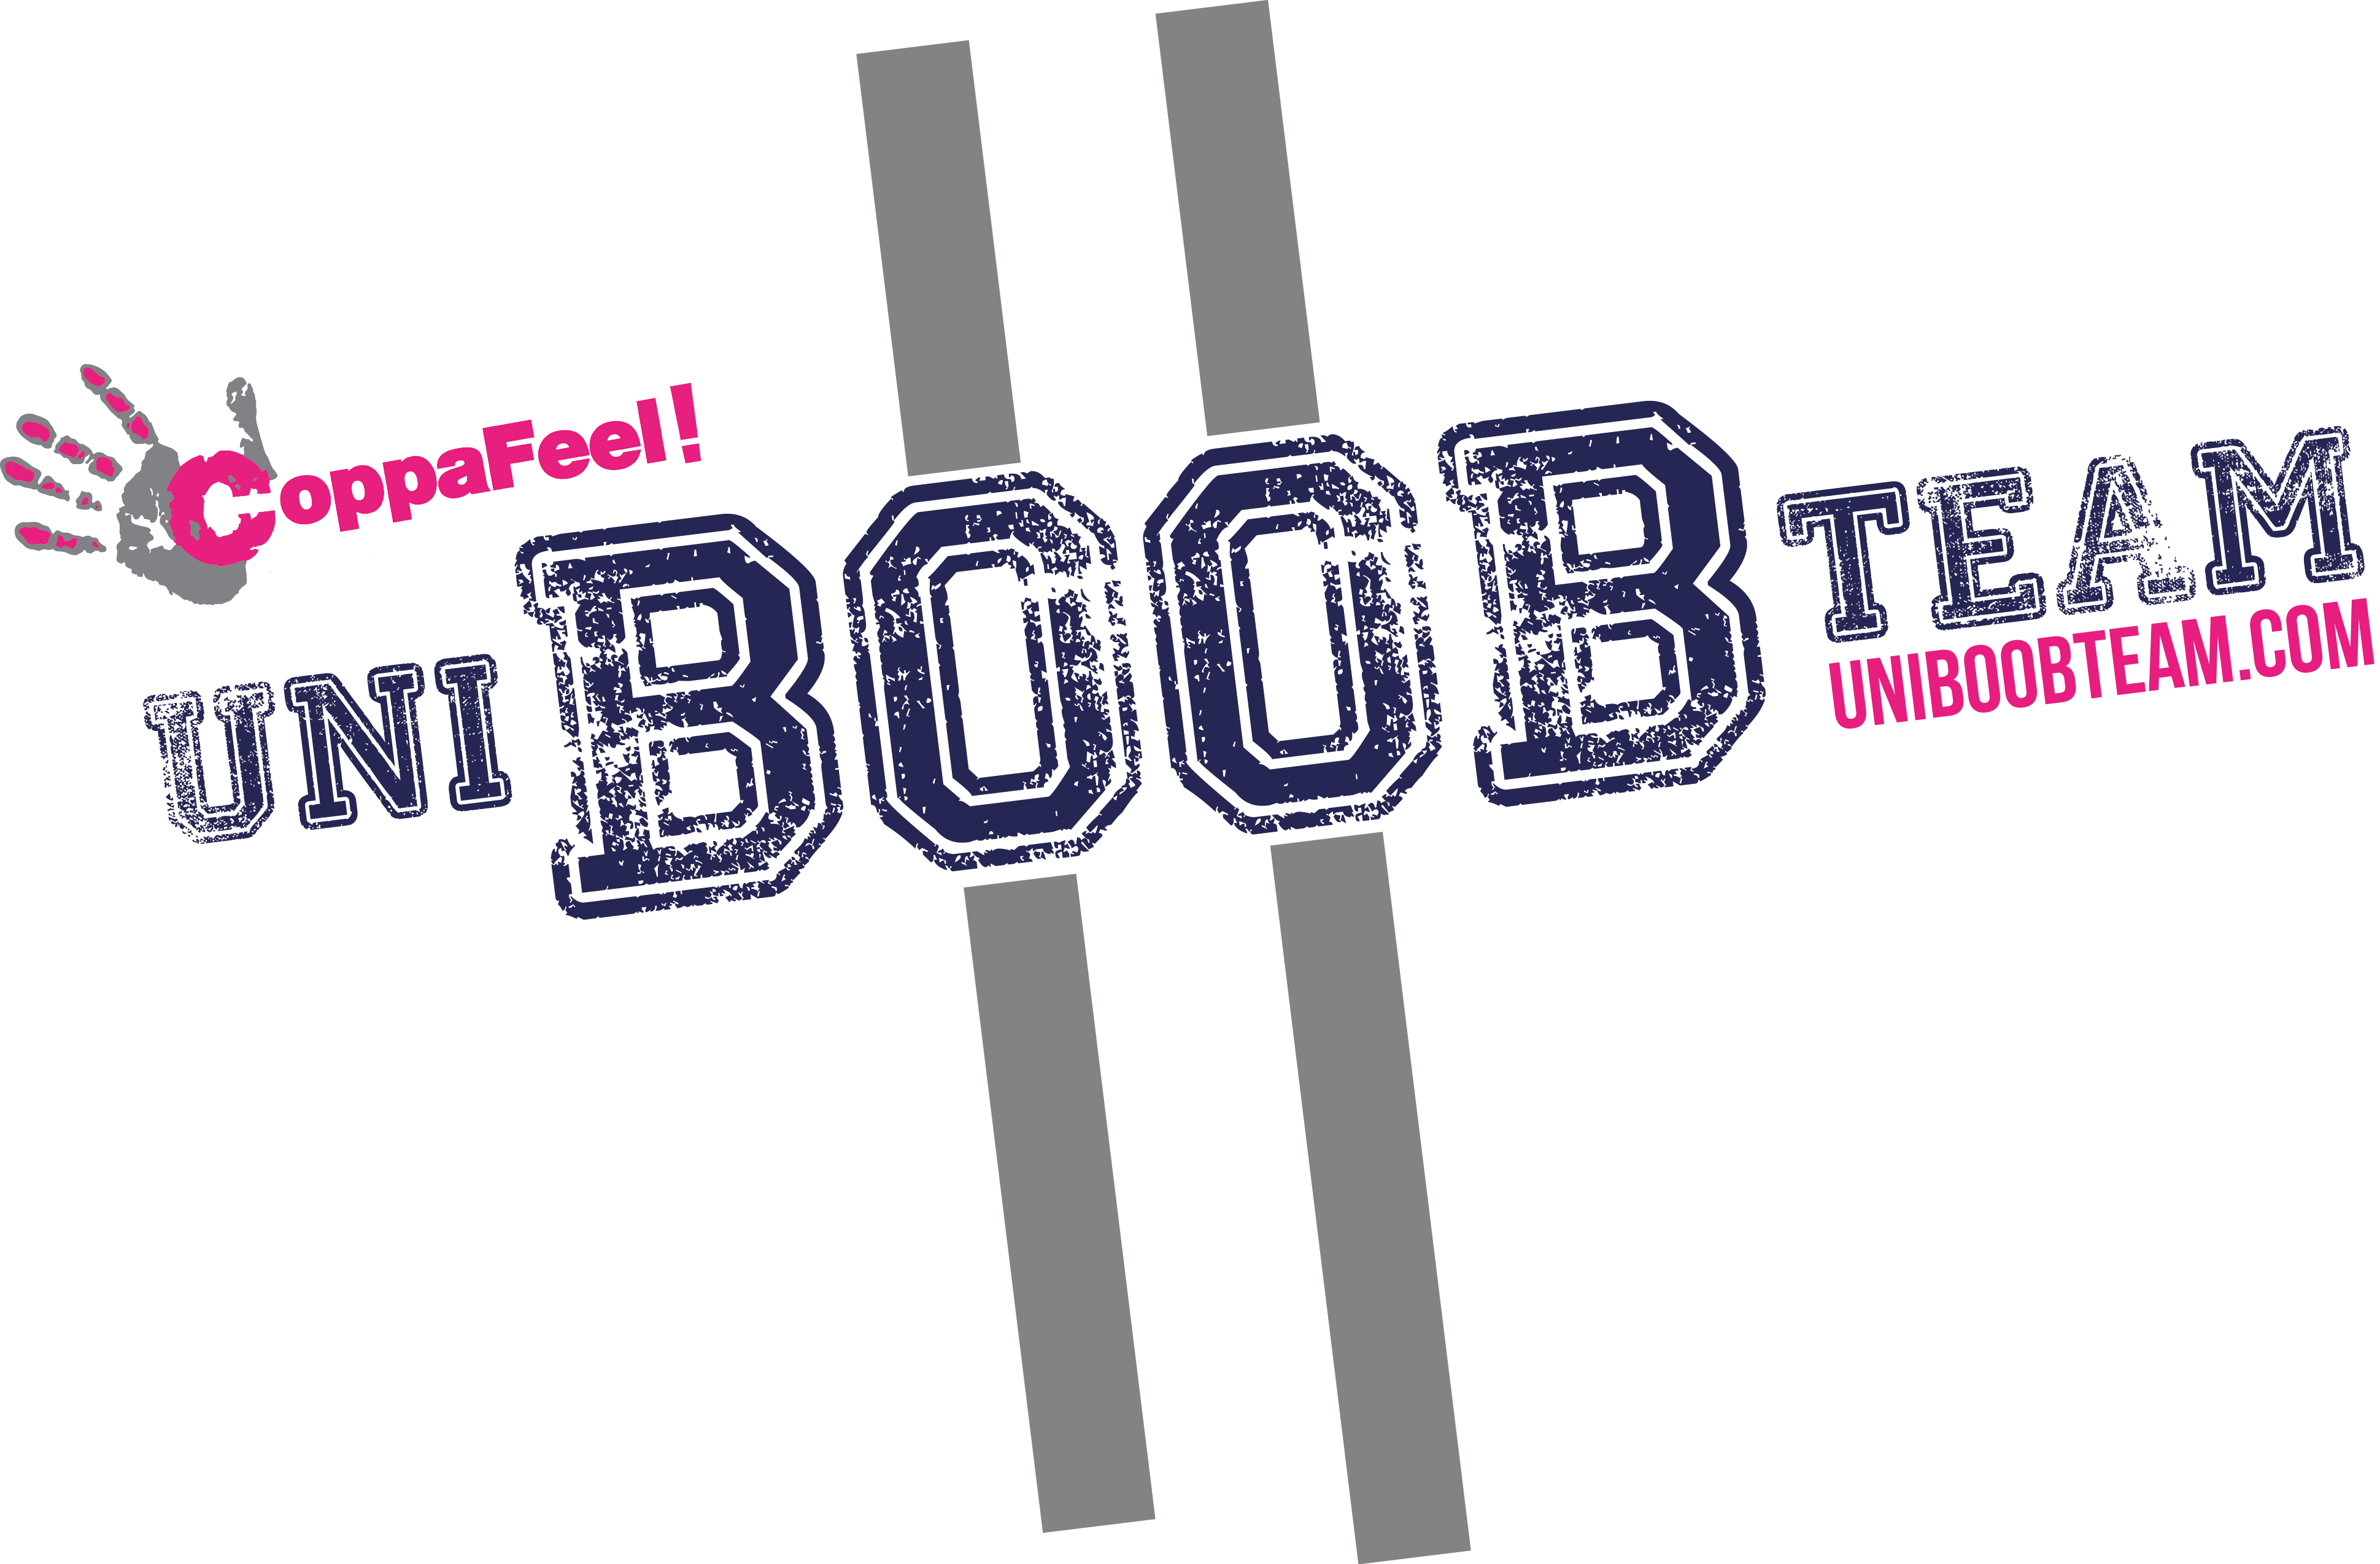 The boob team